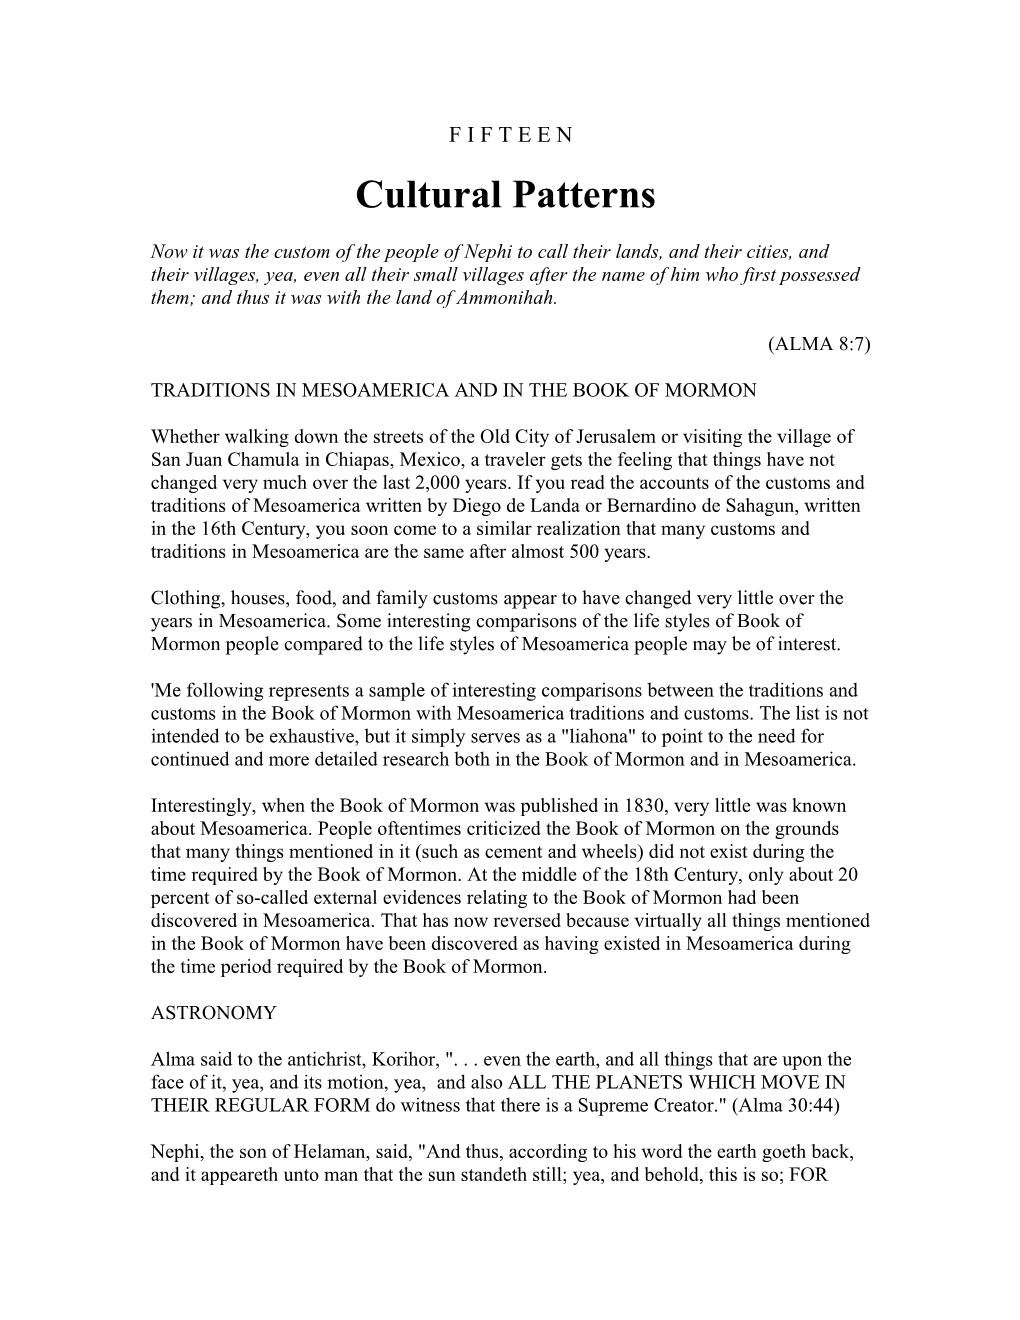 Cultural Patterns